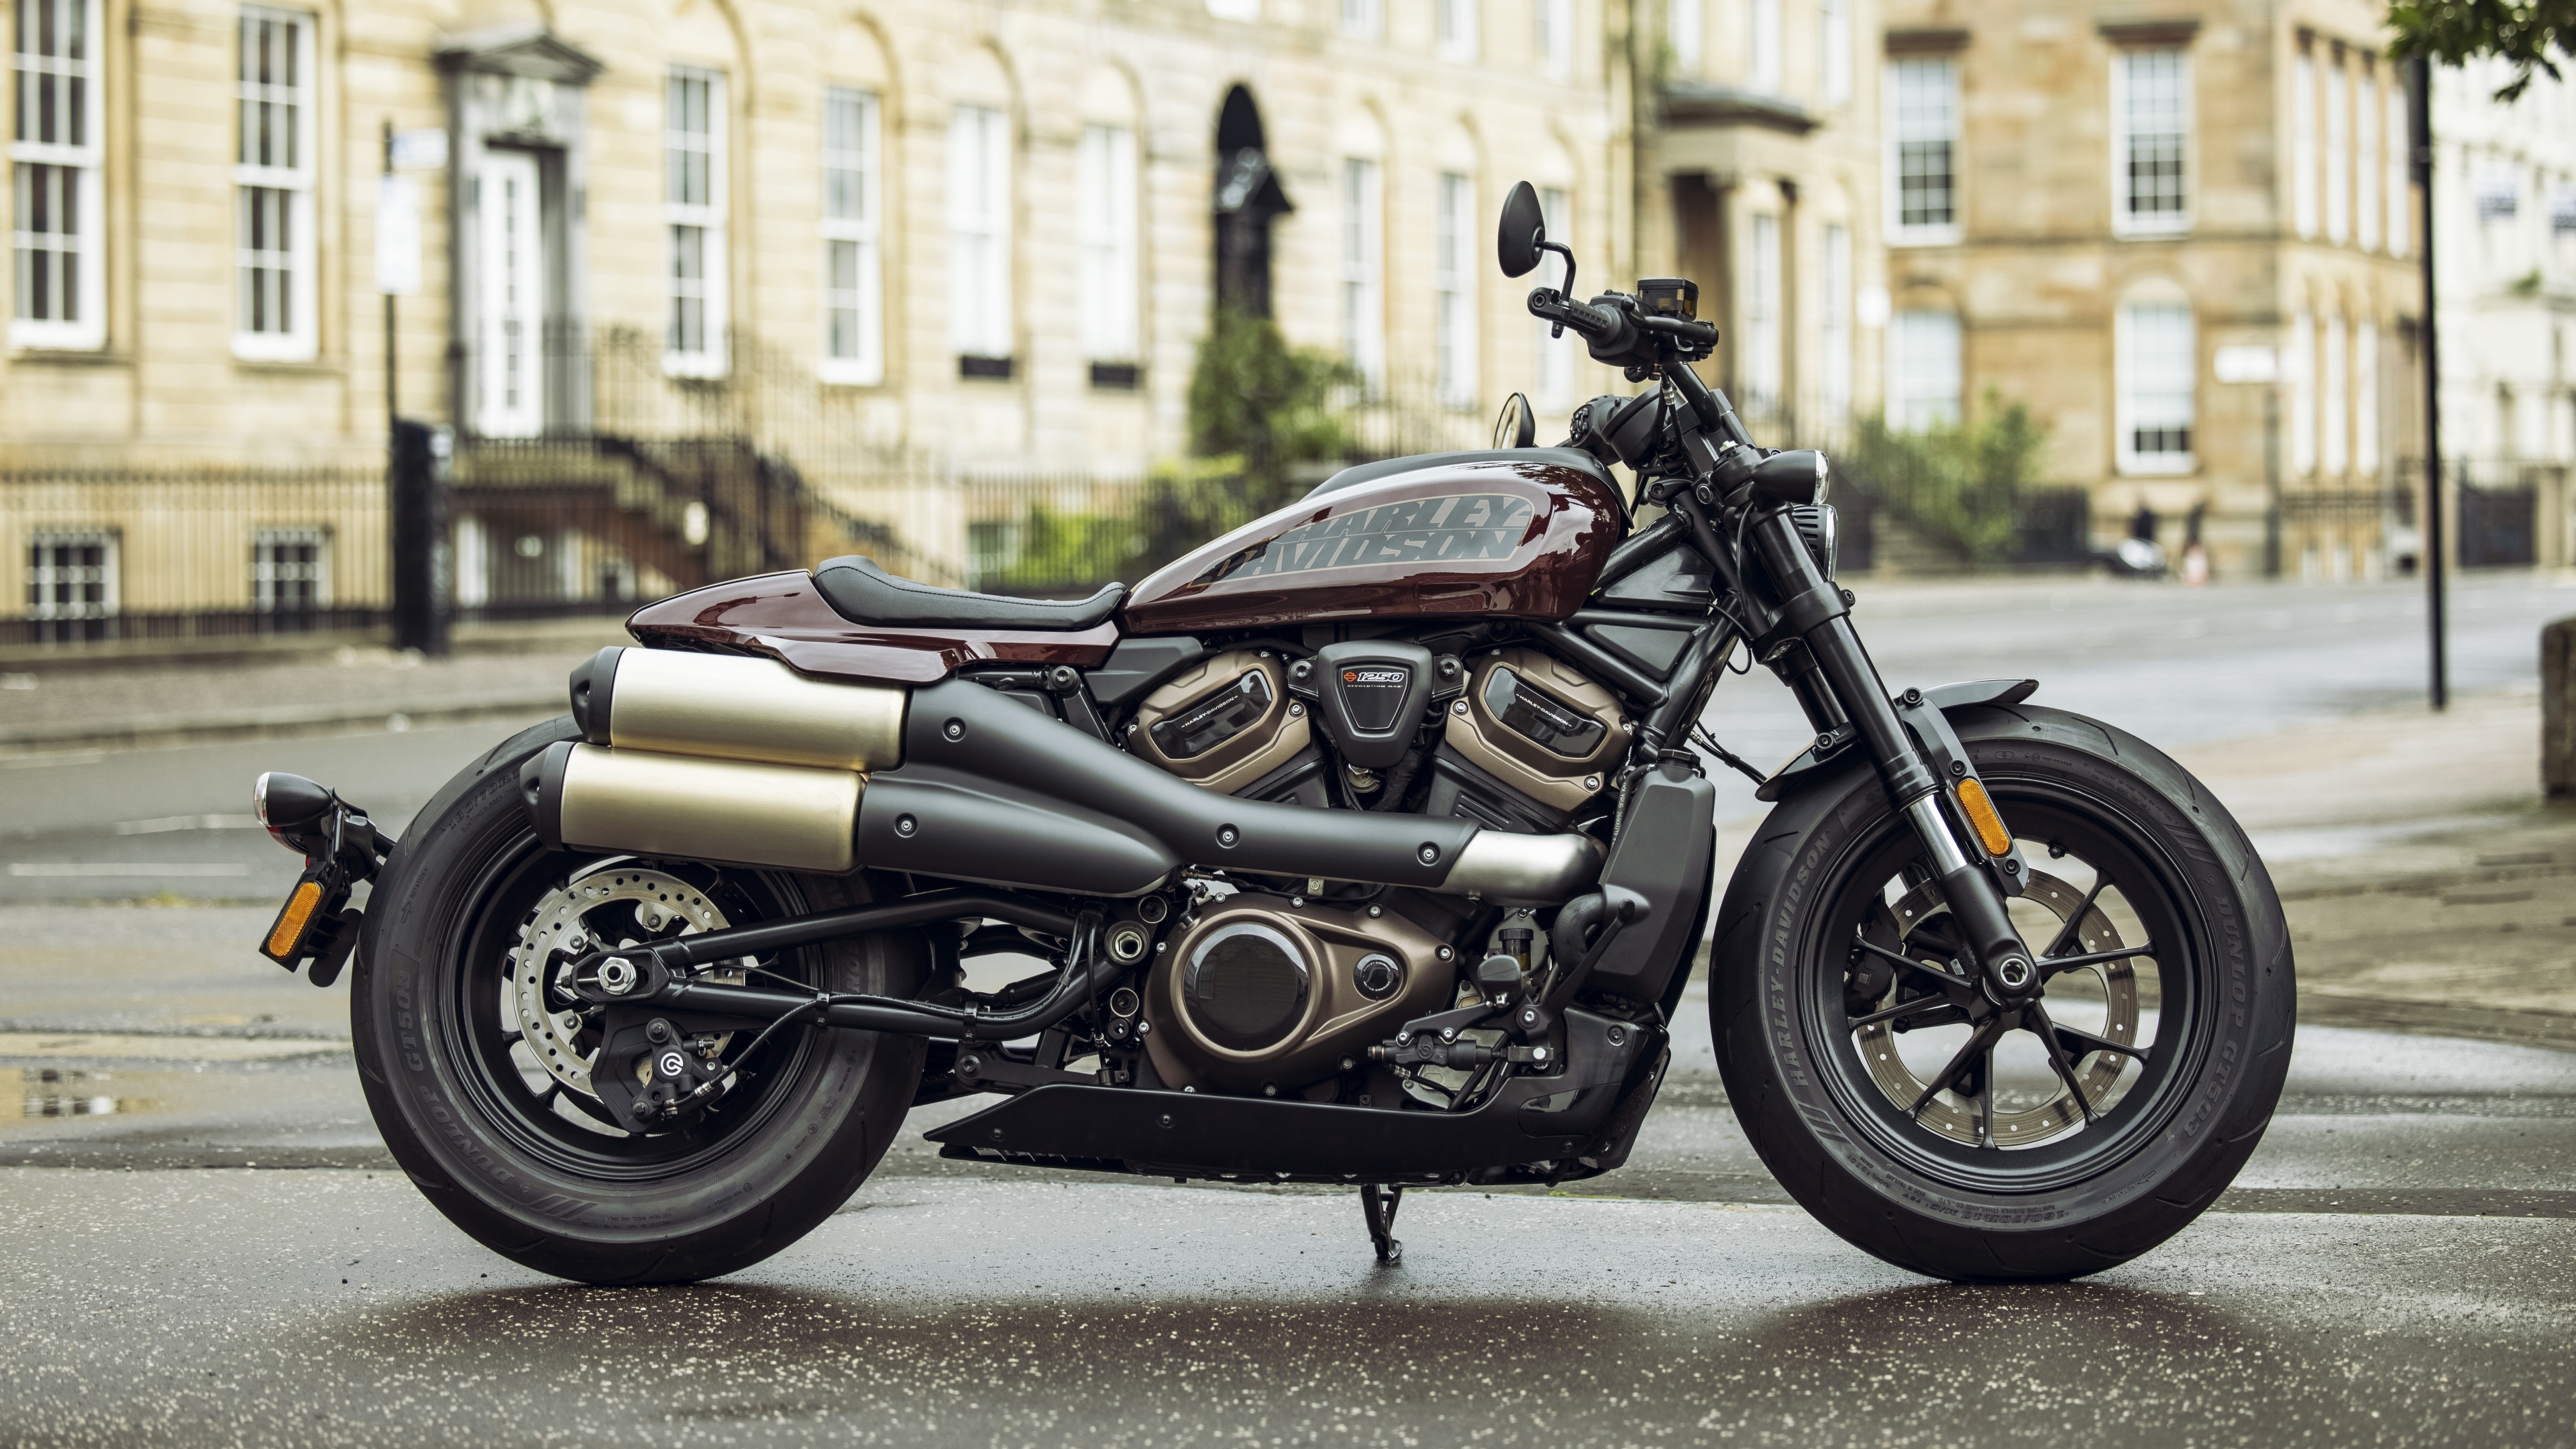 Harley-Davidson Sportster S, Cruiser motorcycle, 2021 model, High-resolution wallpaper, 3840x2160 4K Desktop